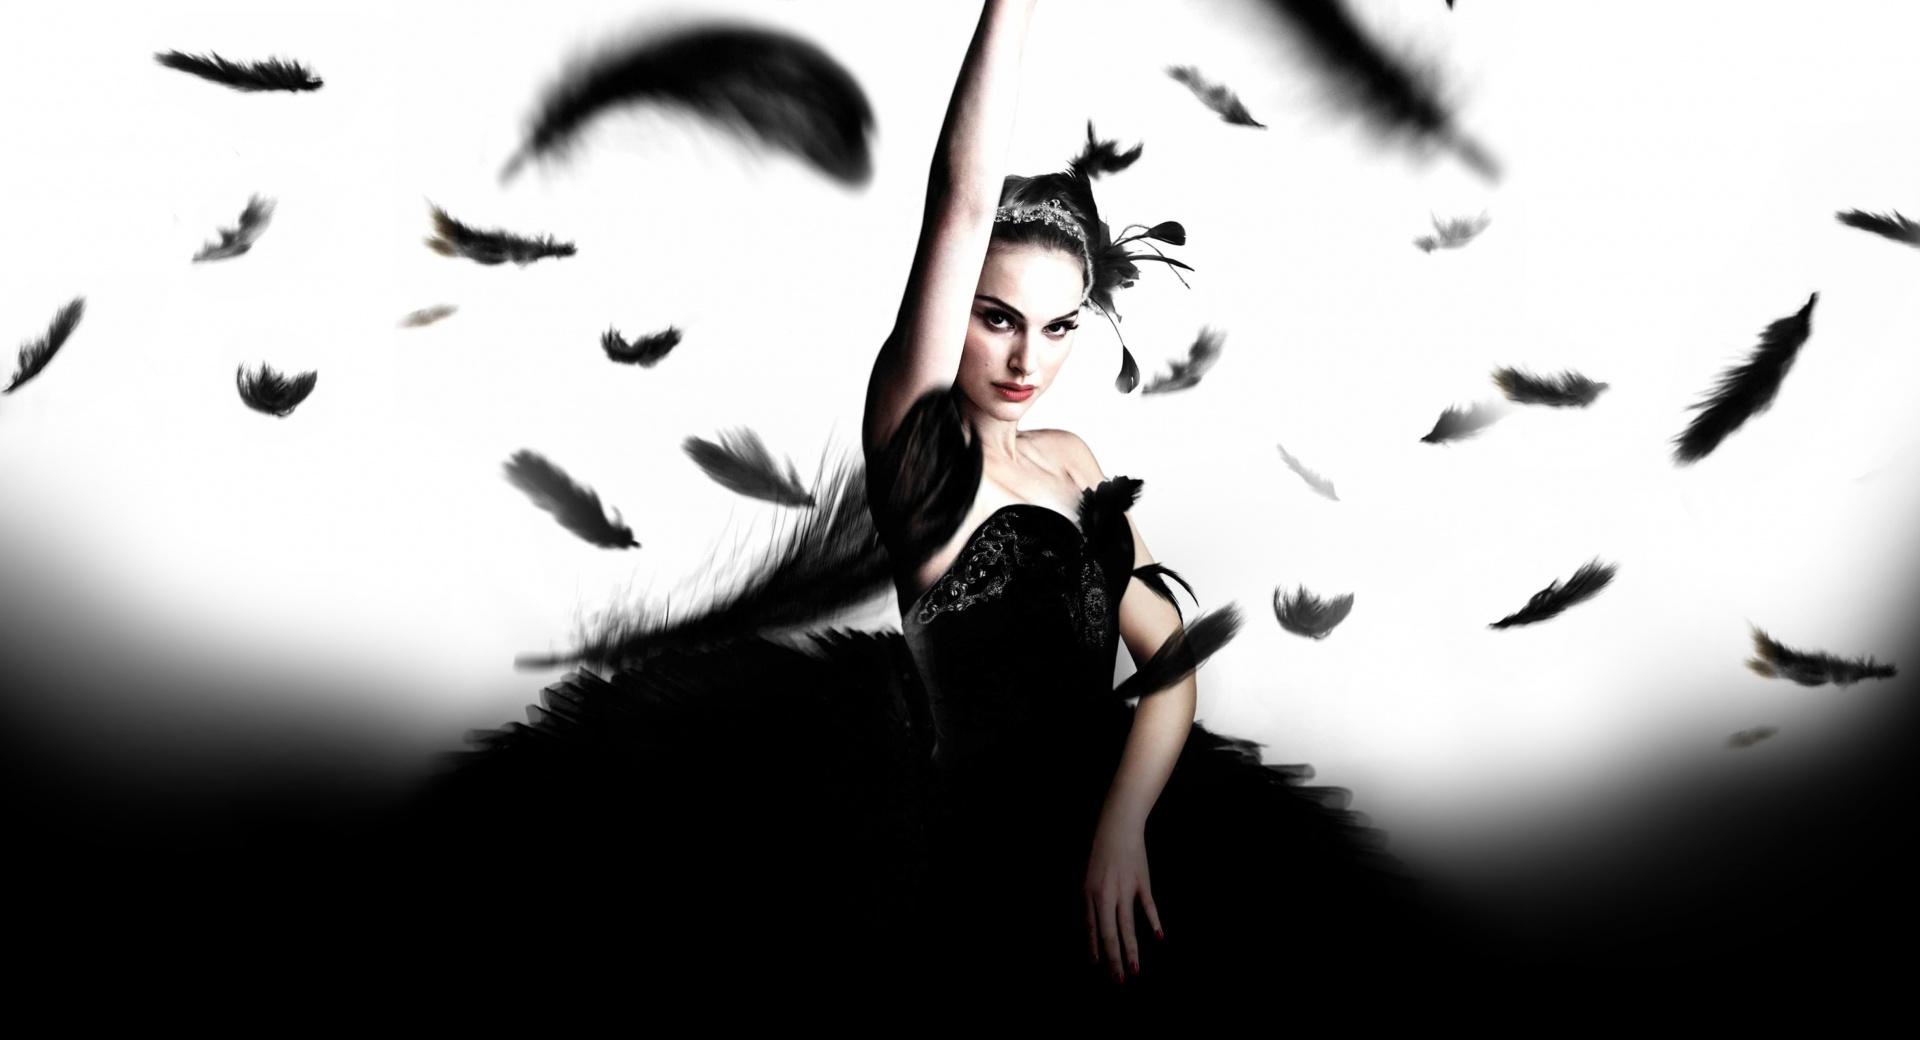 Black Swan Natalie Portman at 1280 x 960 size wallpapers HD quality